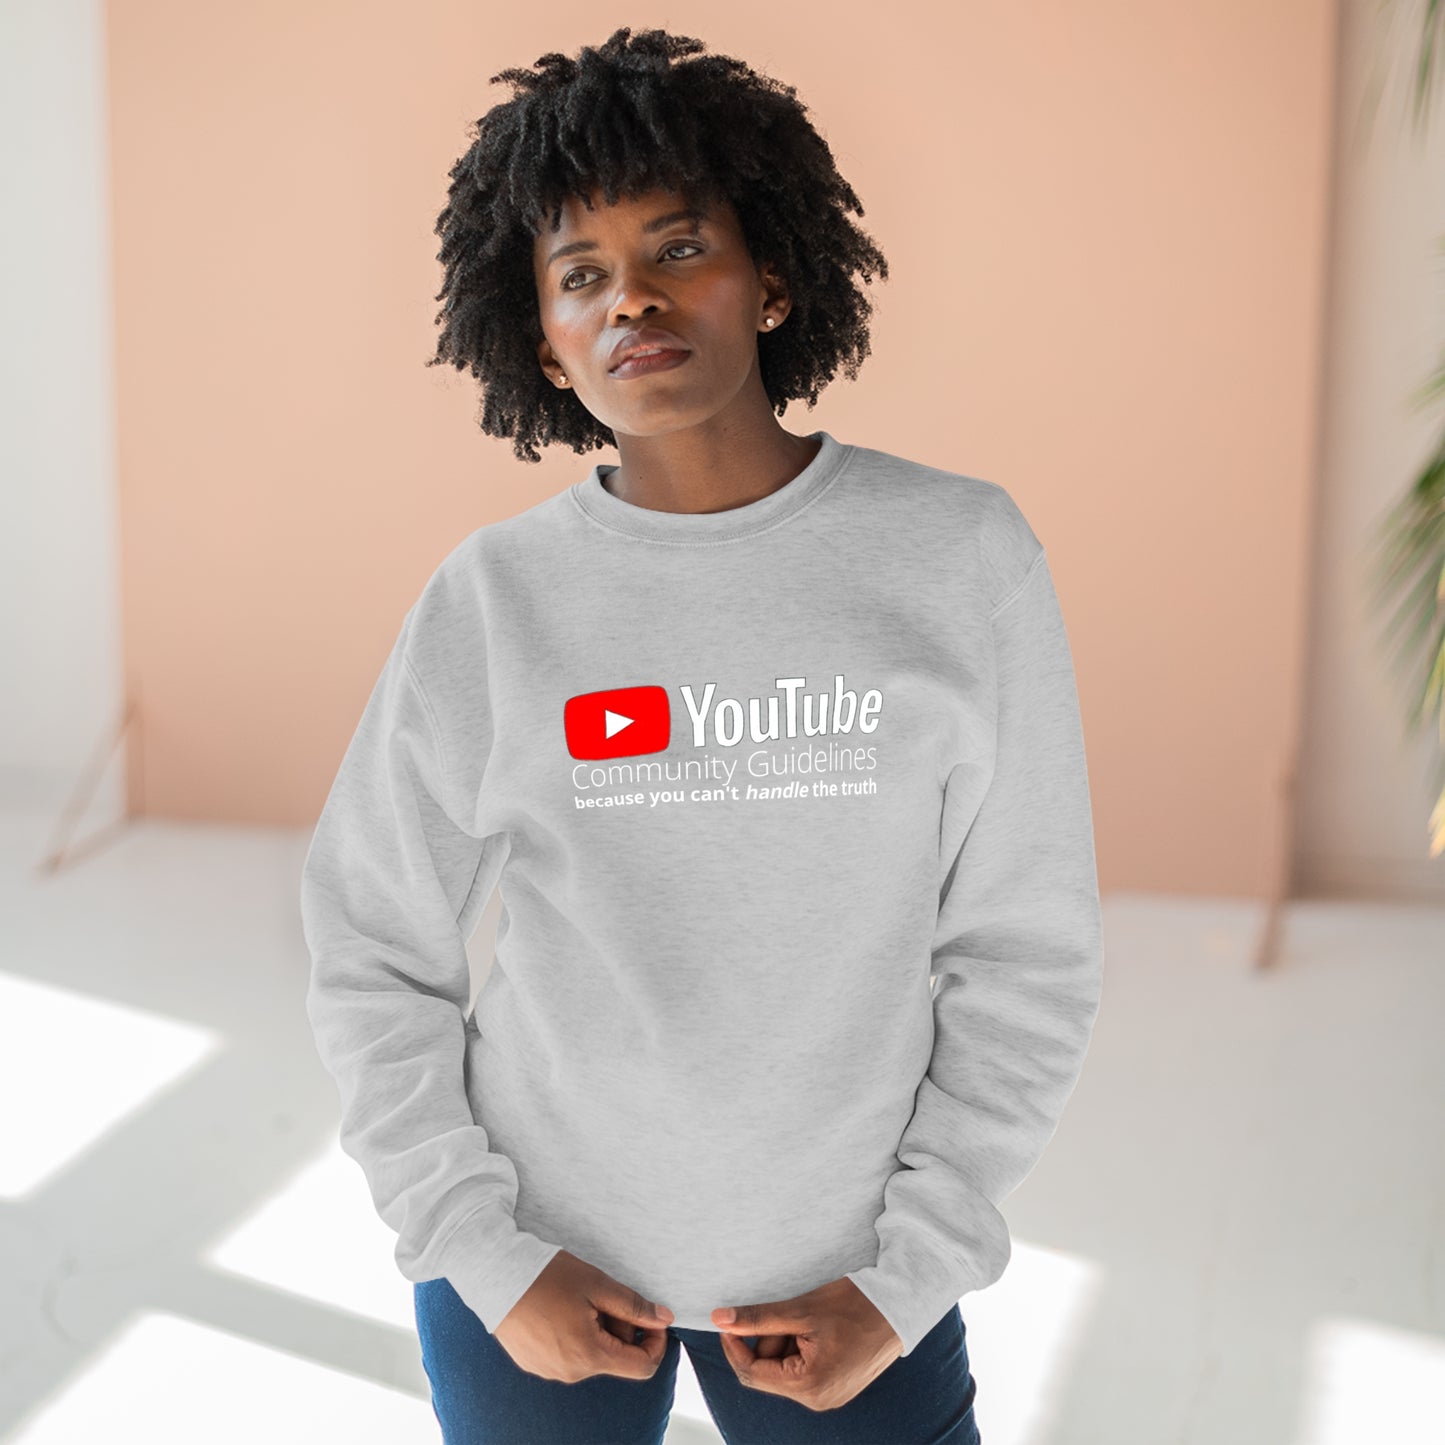 YouTube Community Guidelines Sweatshirt - Unisex